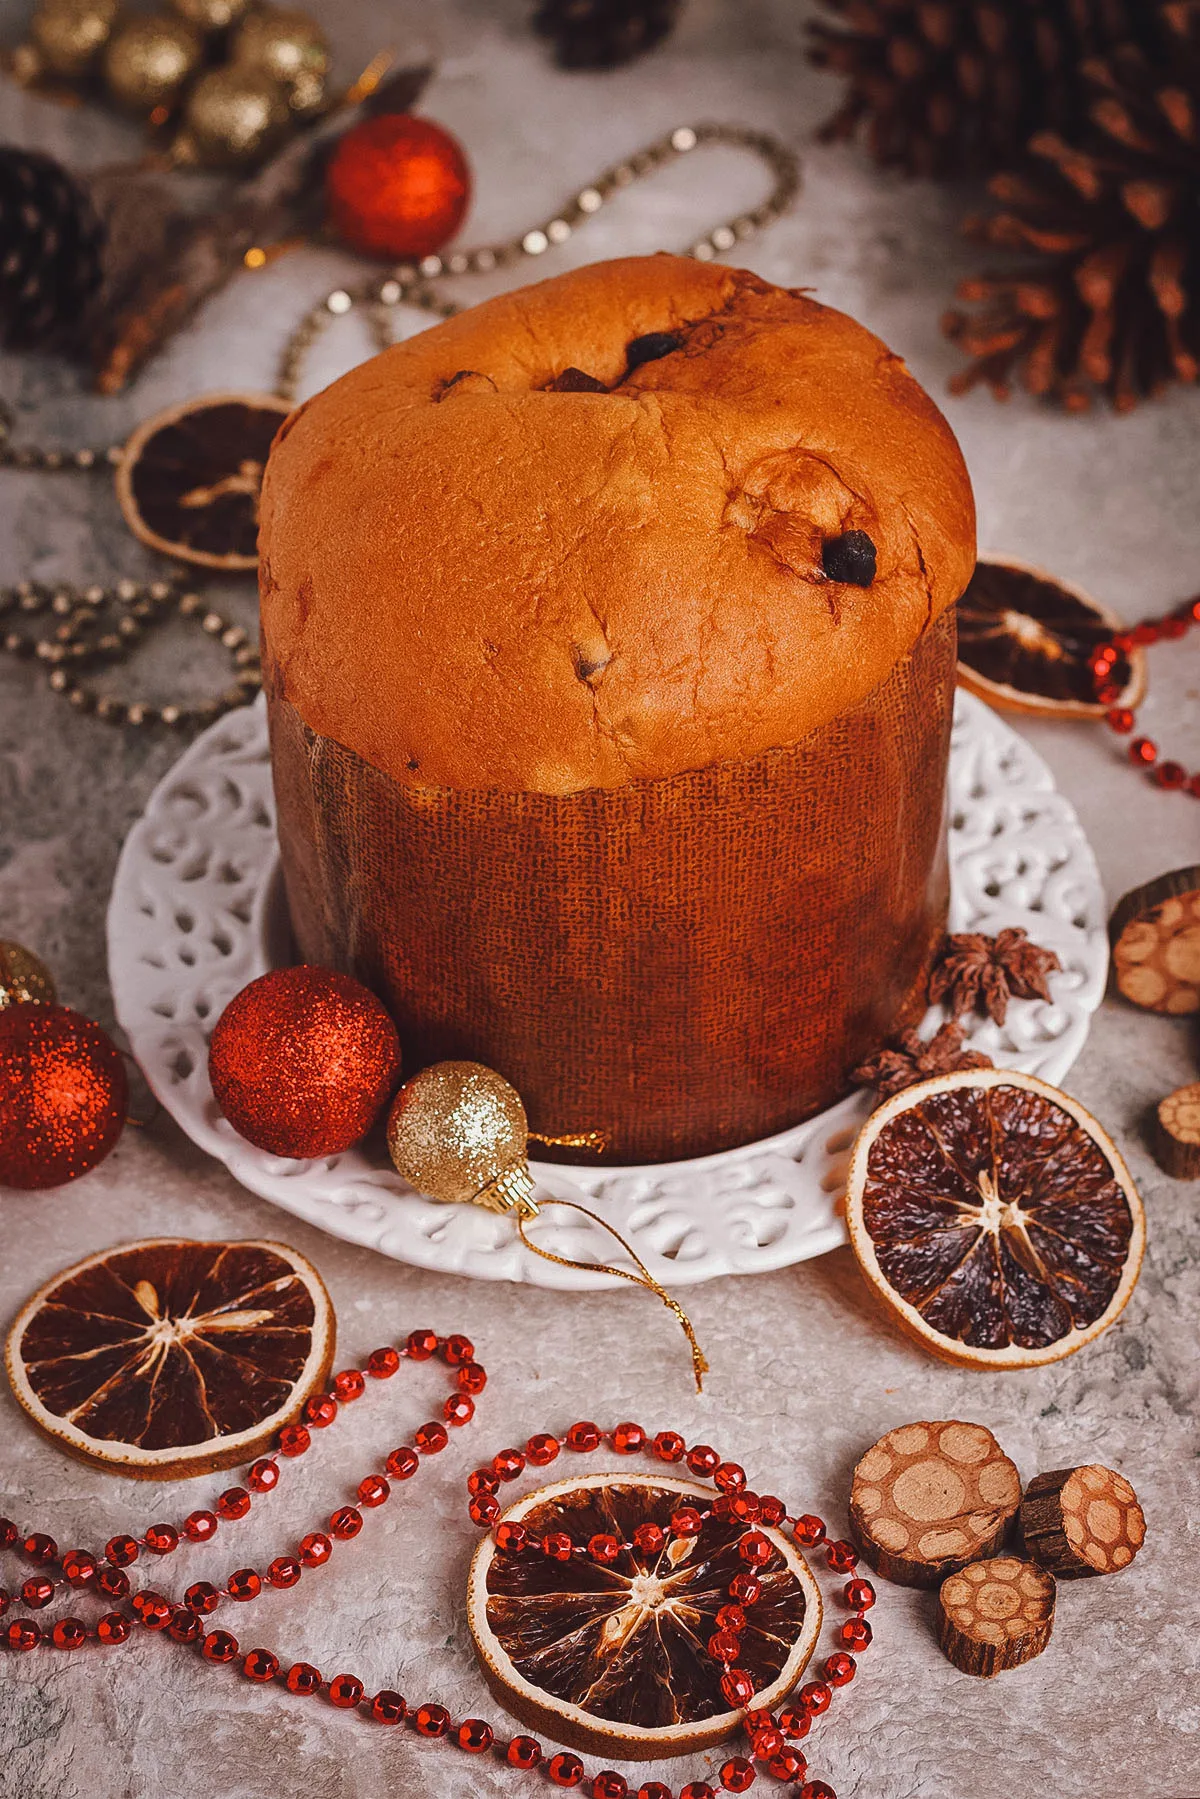 Panettone, an Italian Christmas bread popular in Malta